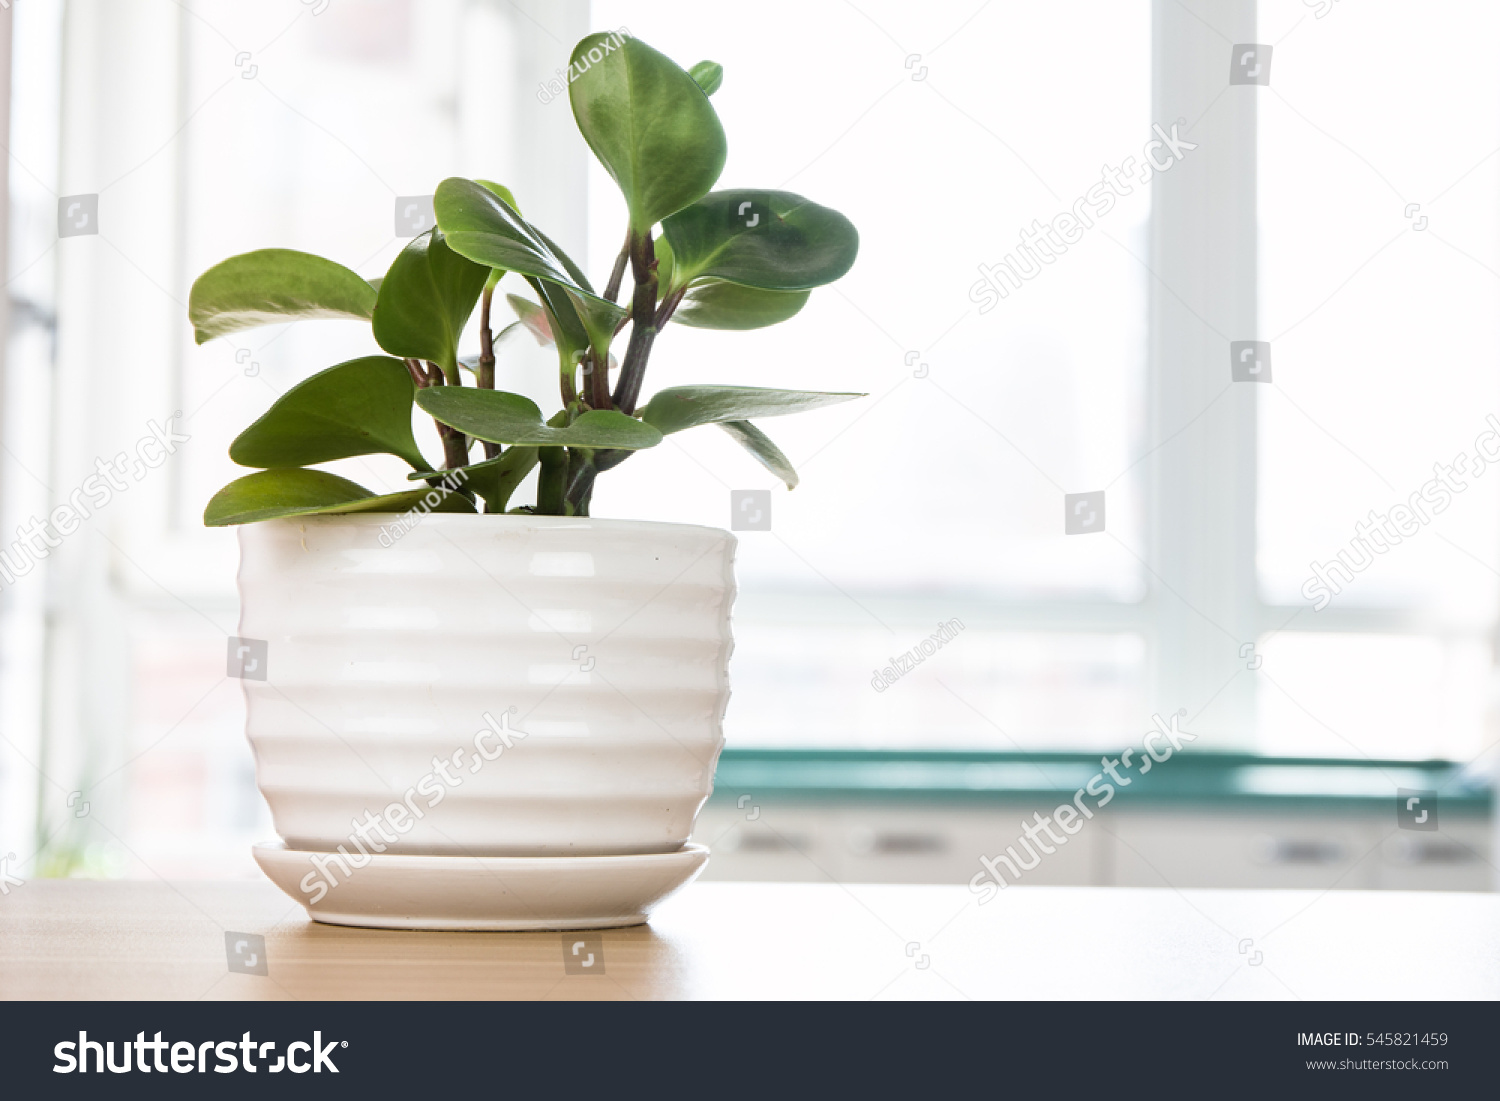 Potted plants on wooden desk #545821459